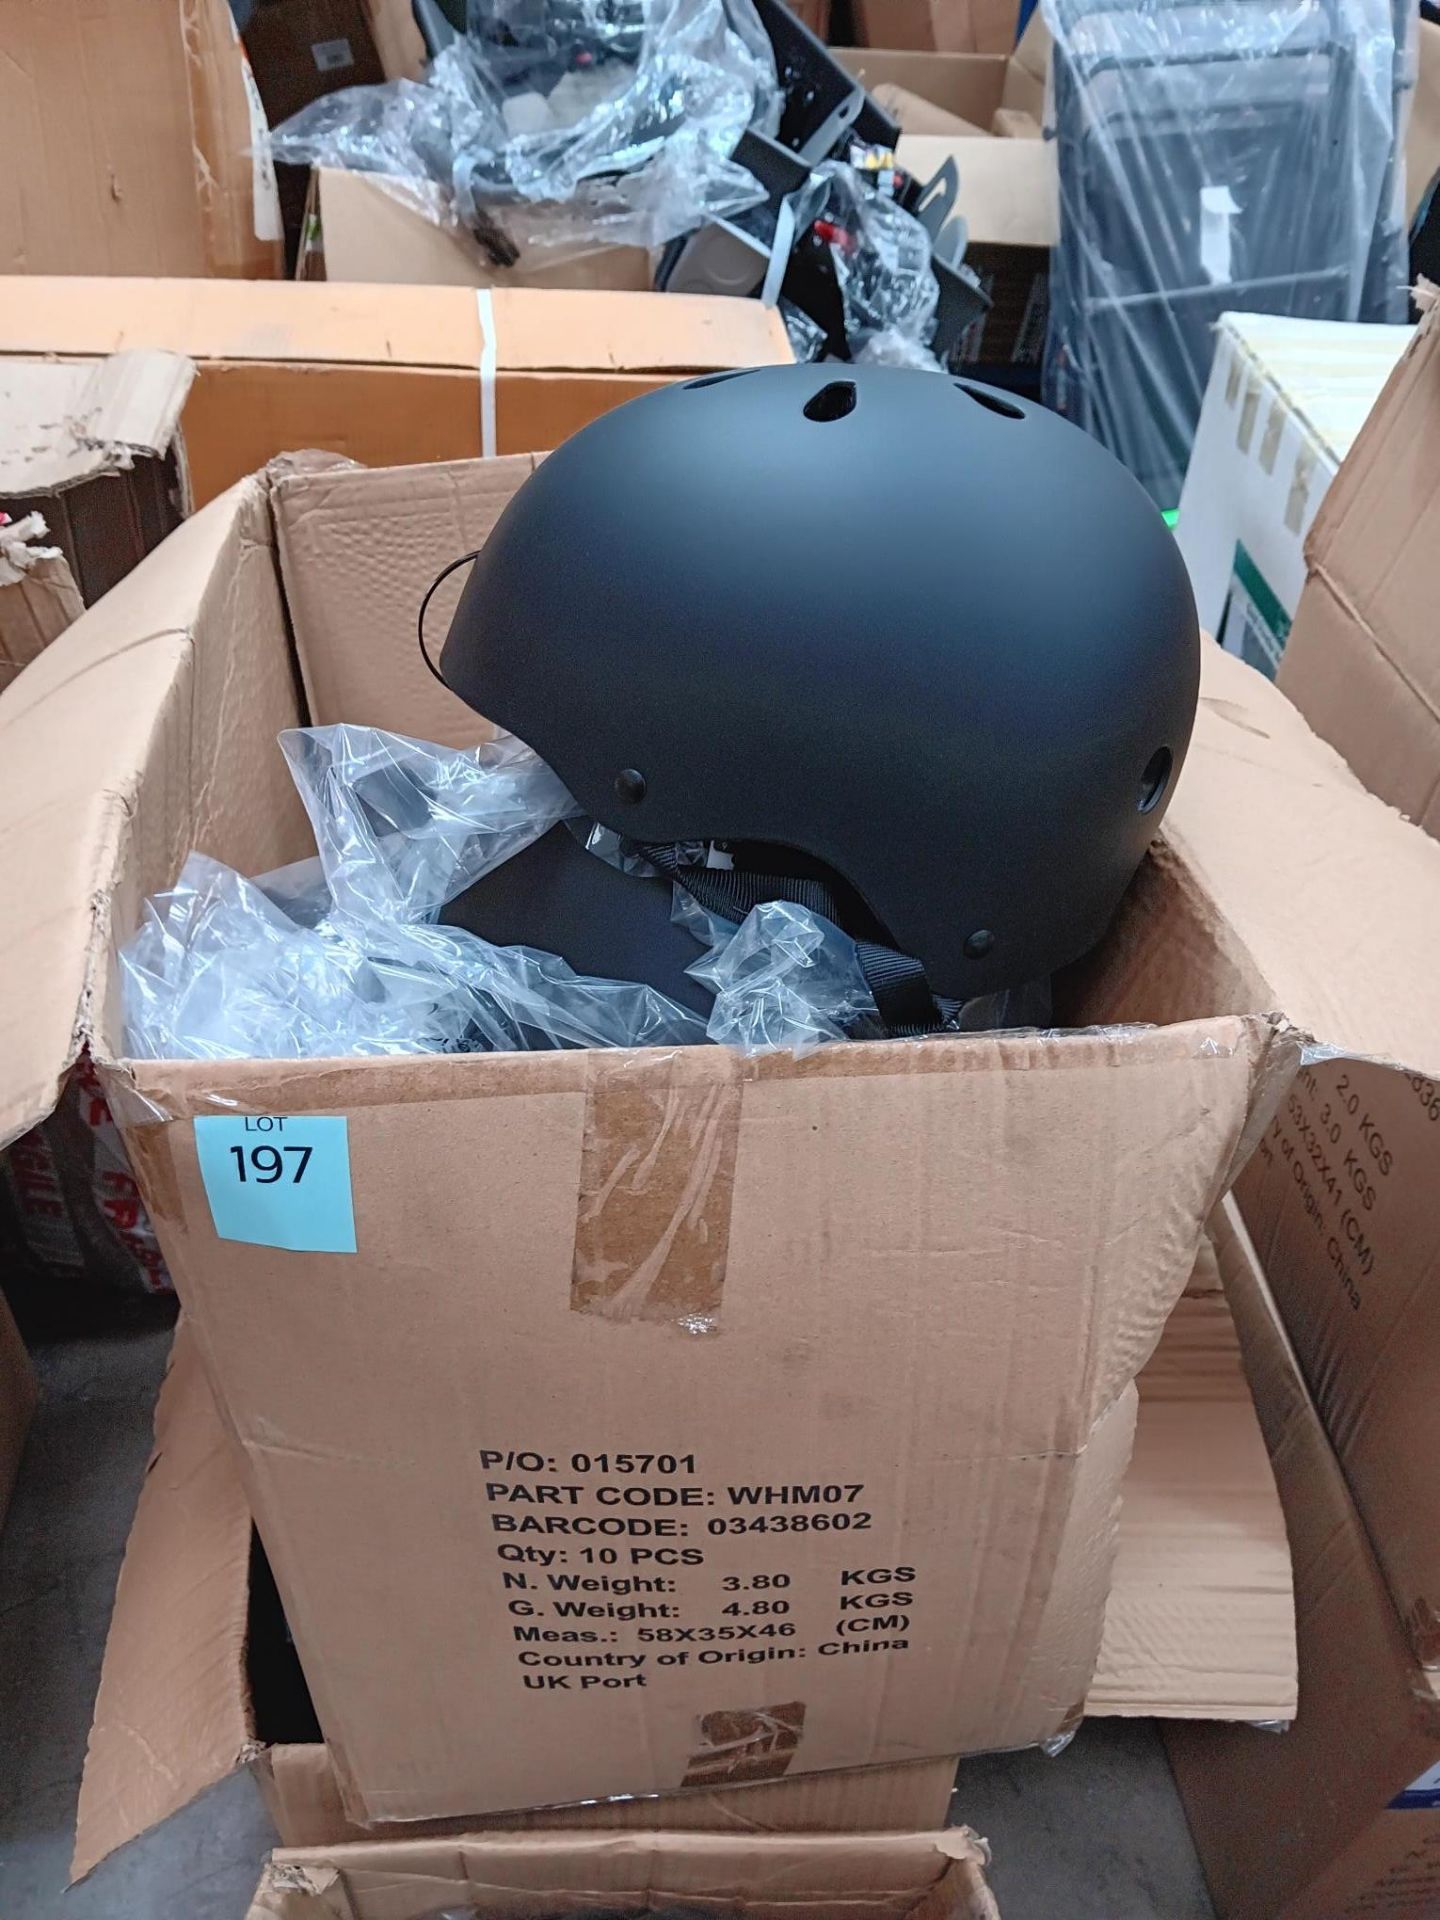 28 x Urban/BMX Bike Helmet, Part Code WHM07, Model Y-09 (Size 54-58), to 3 x Boxes - Image 2 of 2